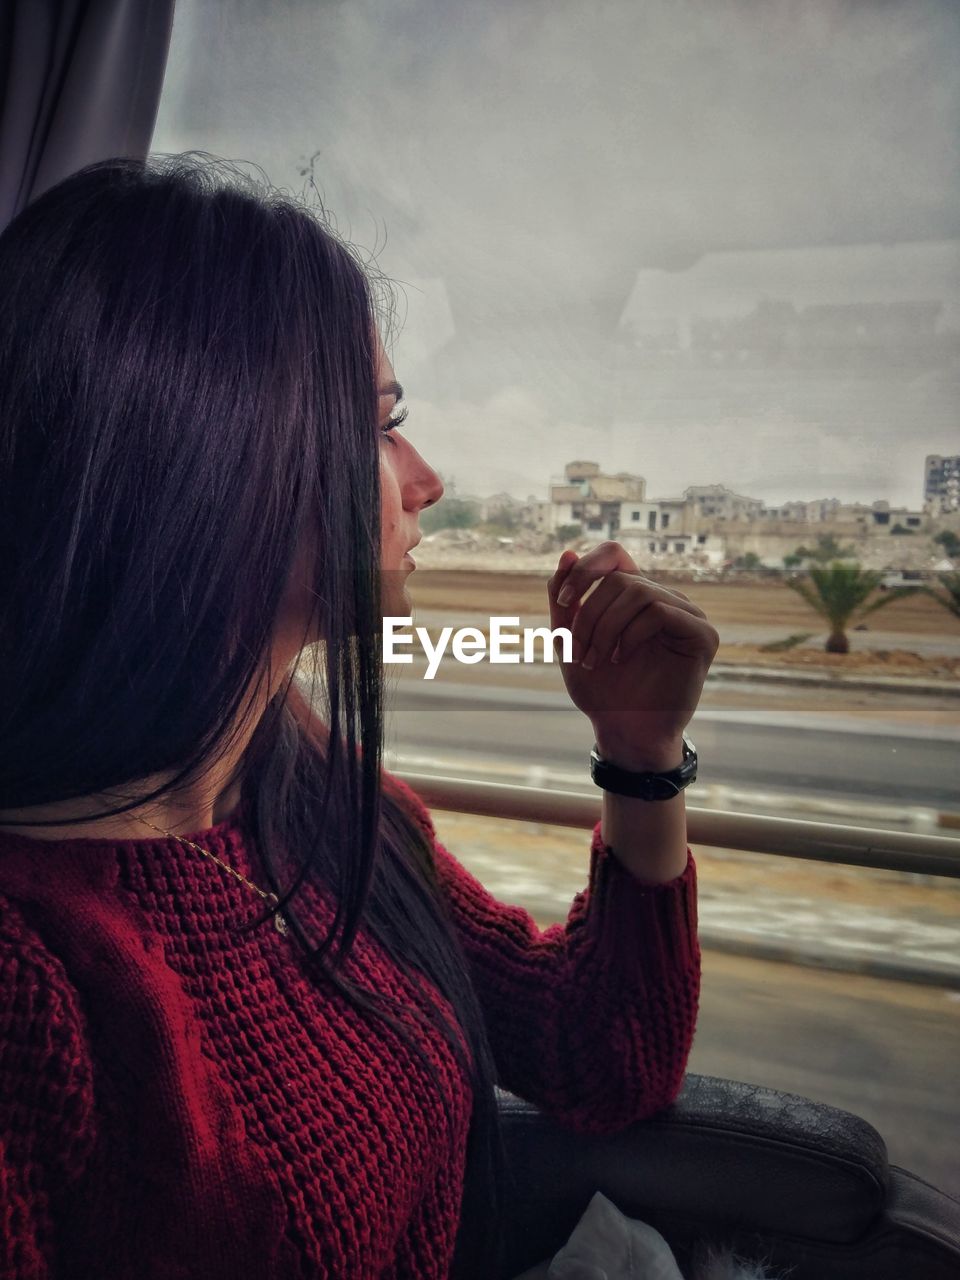 Woman looking through window in bus